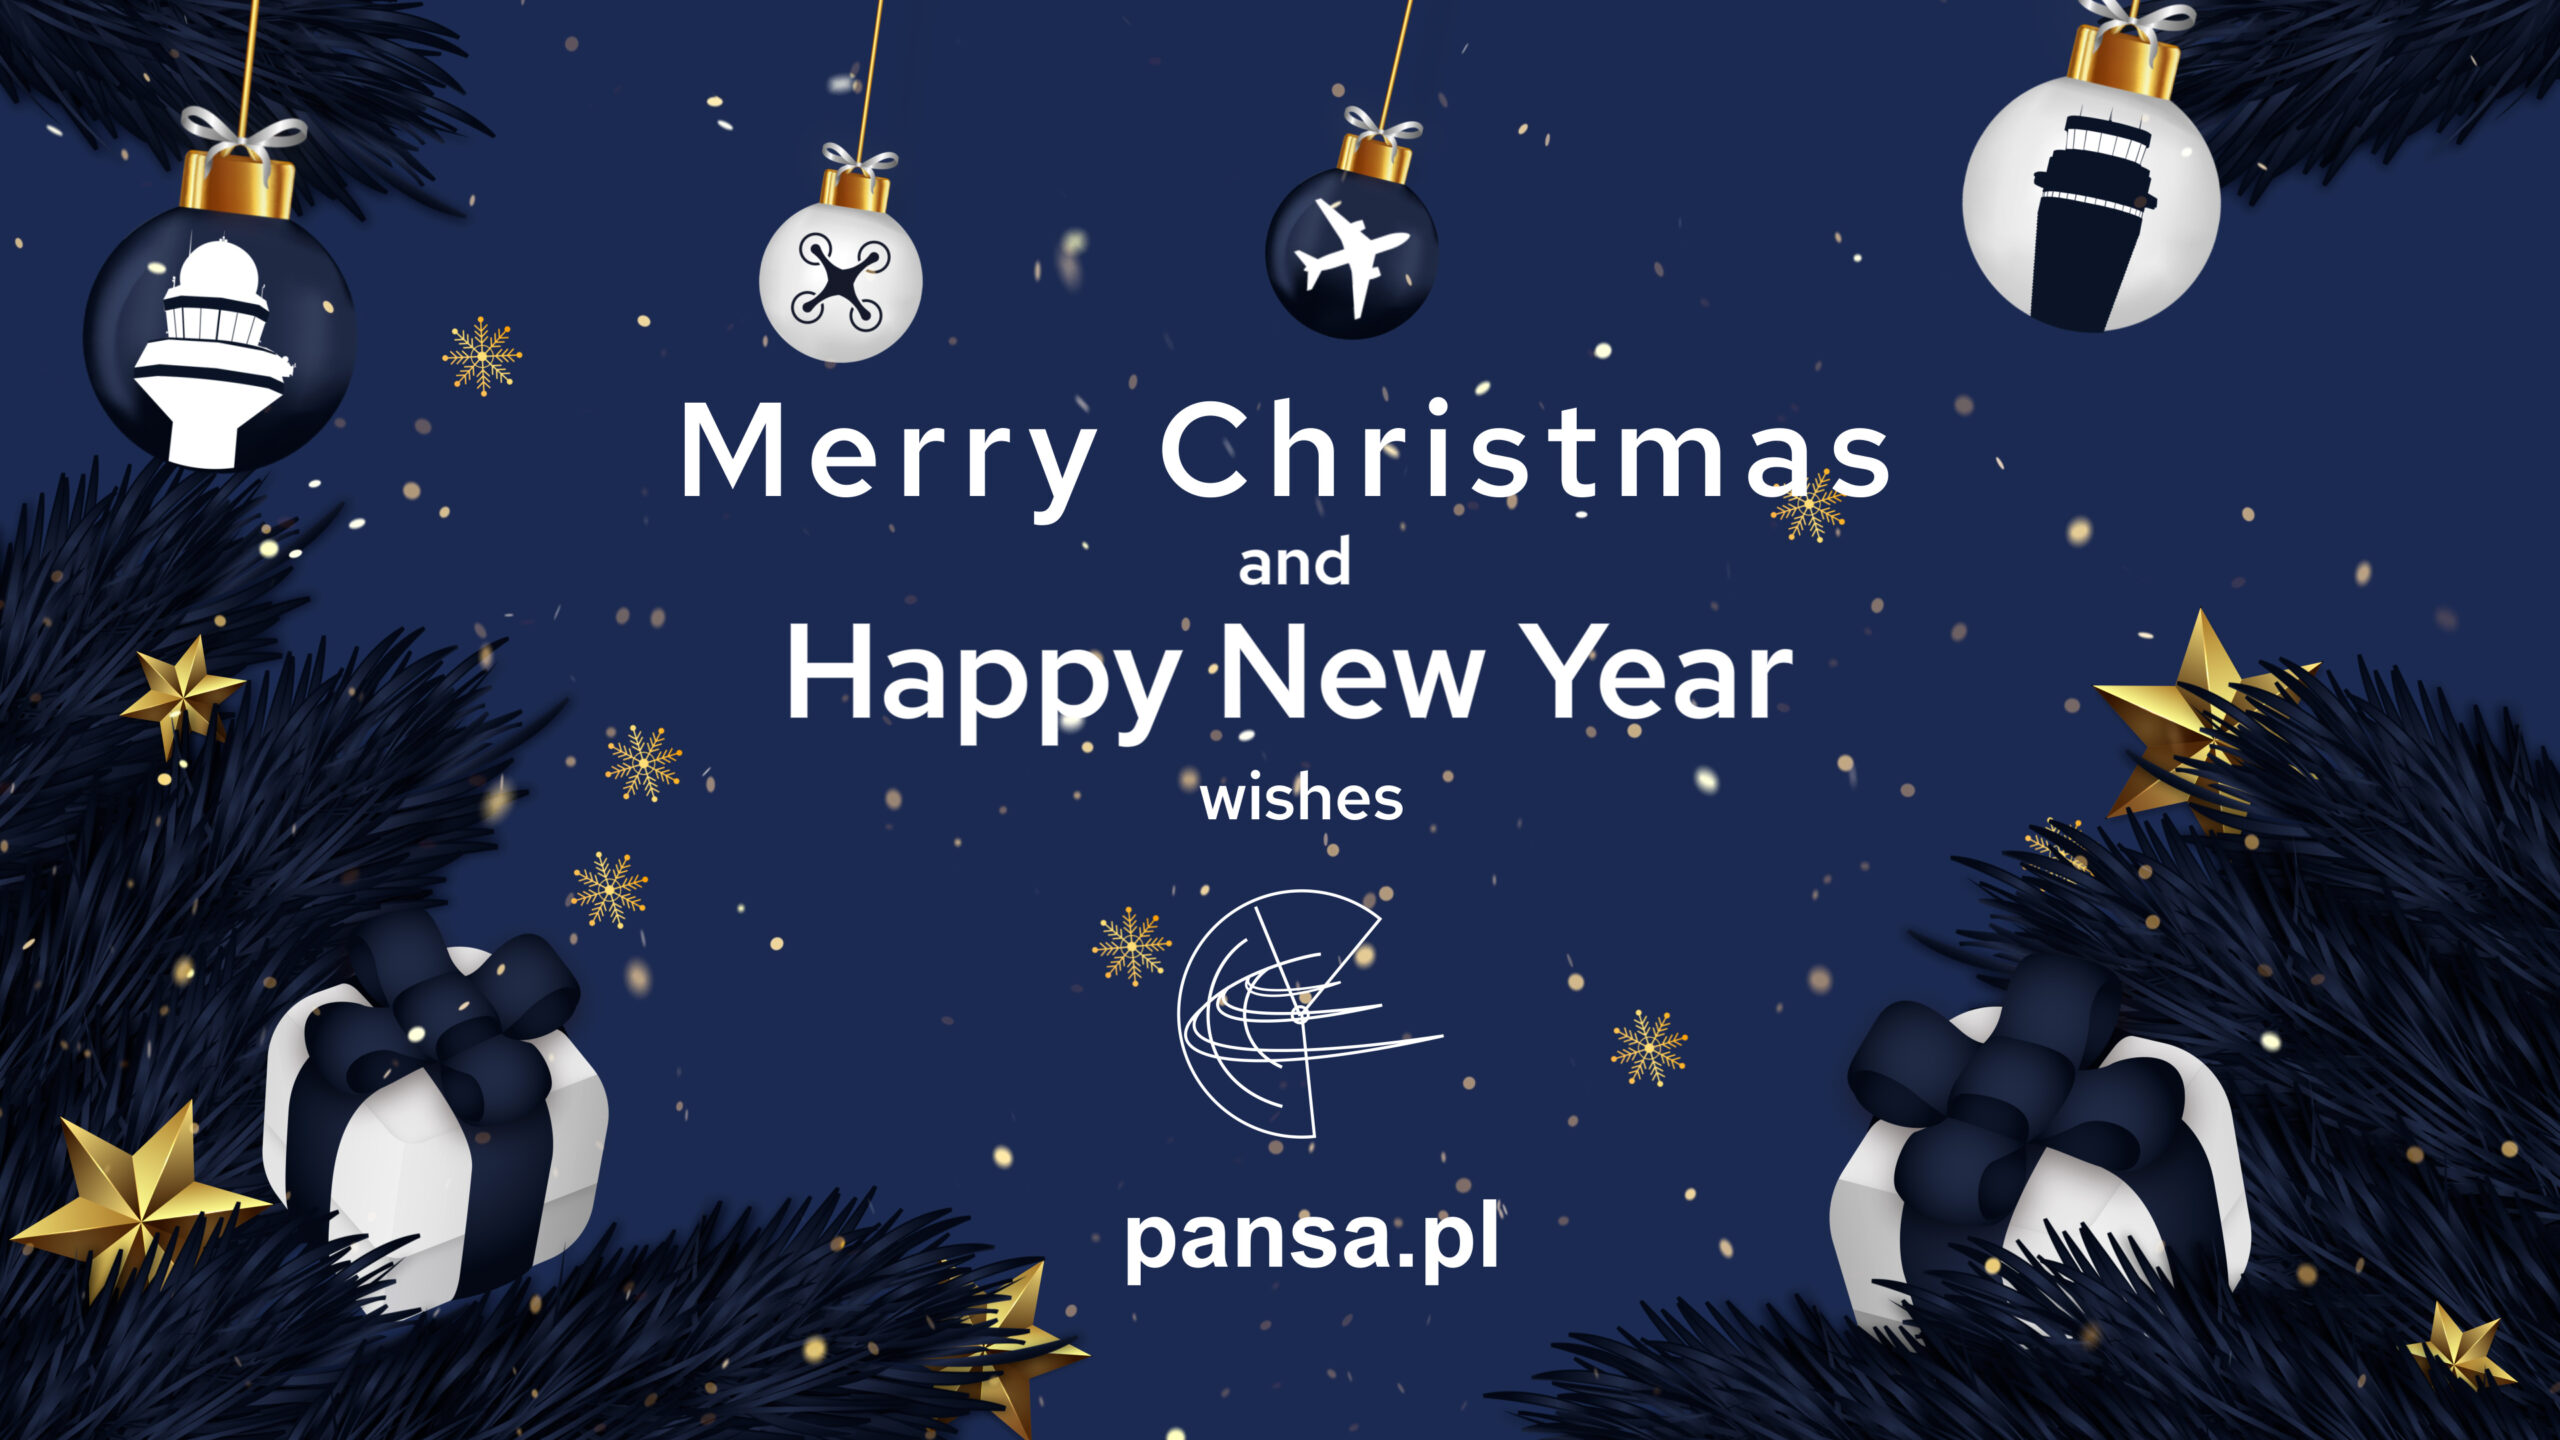 Season’s greetings from PANSA!